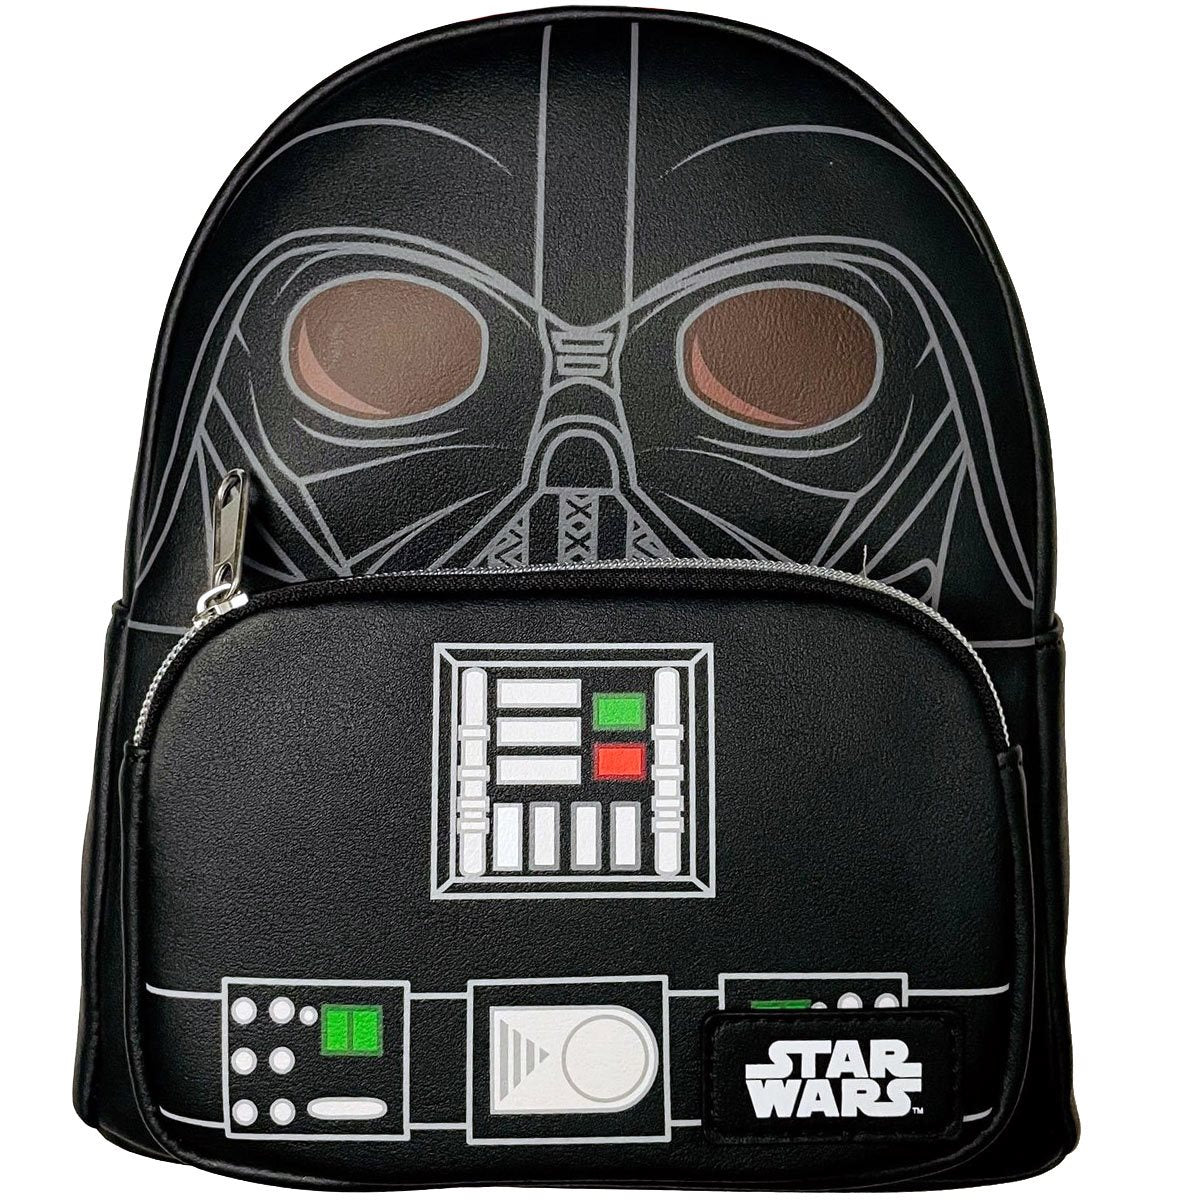 Star Wars Darth Vader Cosplay Mini-Backpack